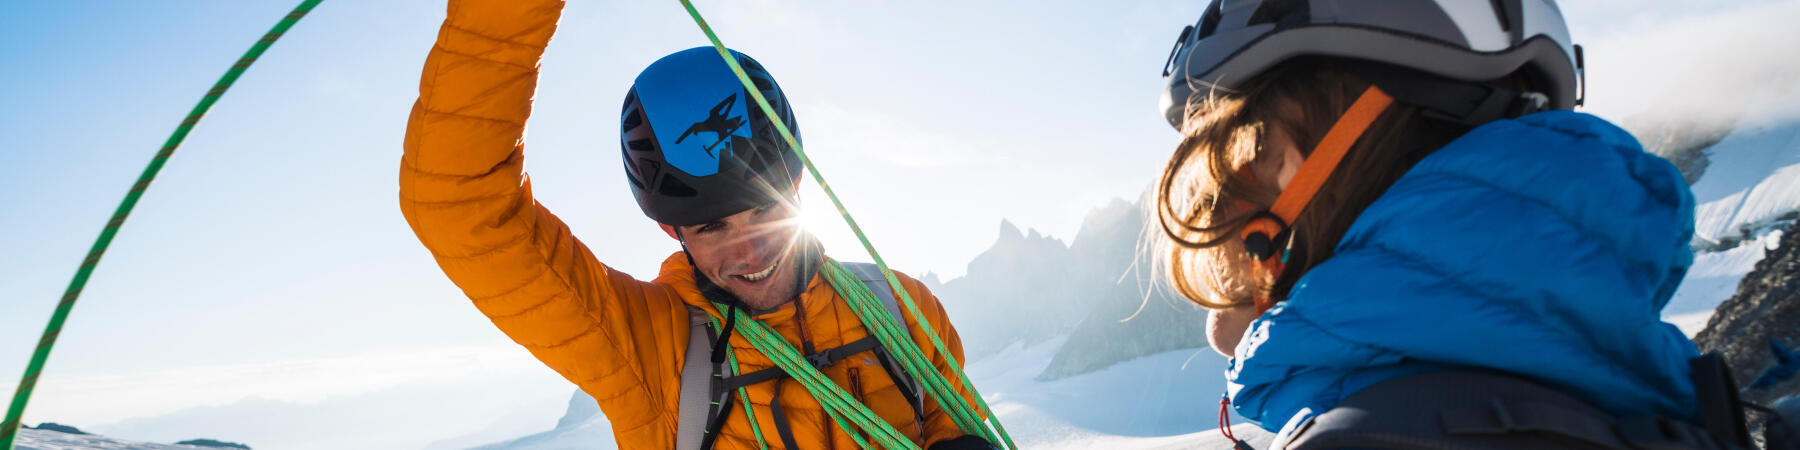 5 conseils pour faire durer sa corde d'escalade ou d'alpinisme